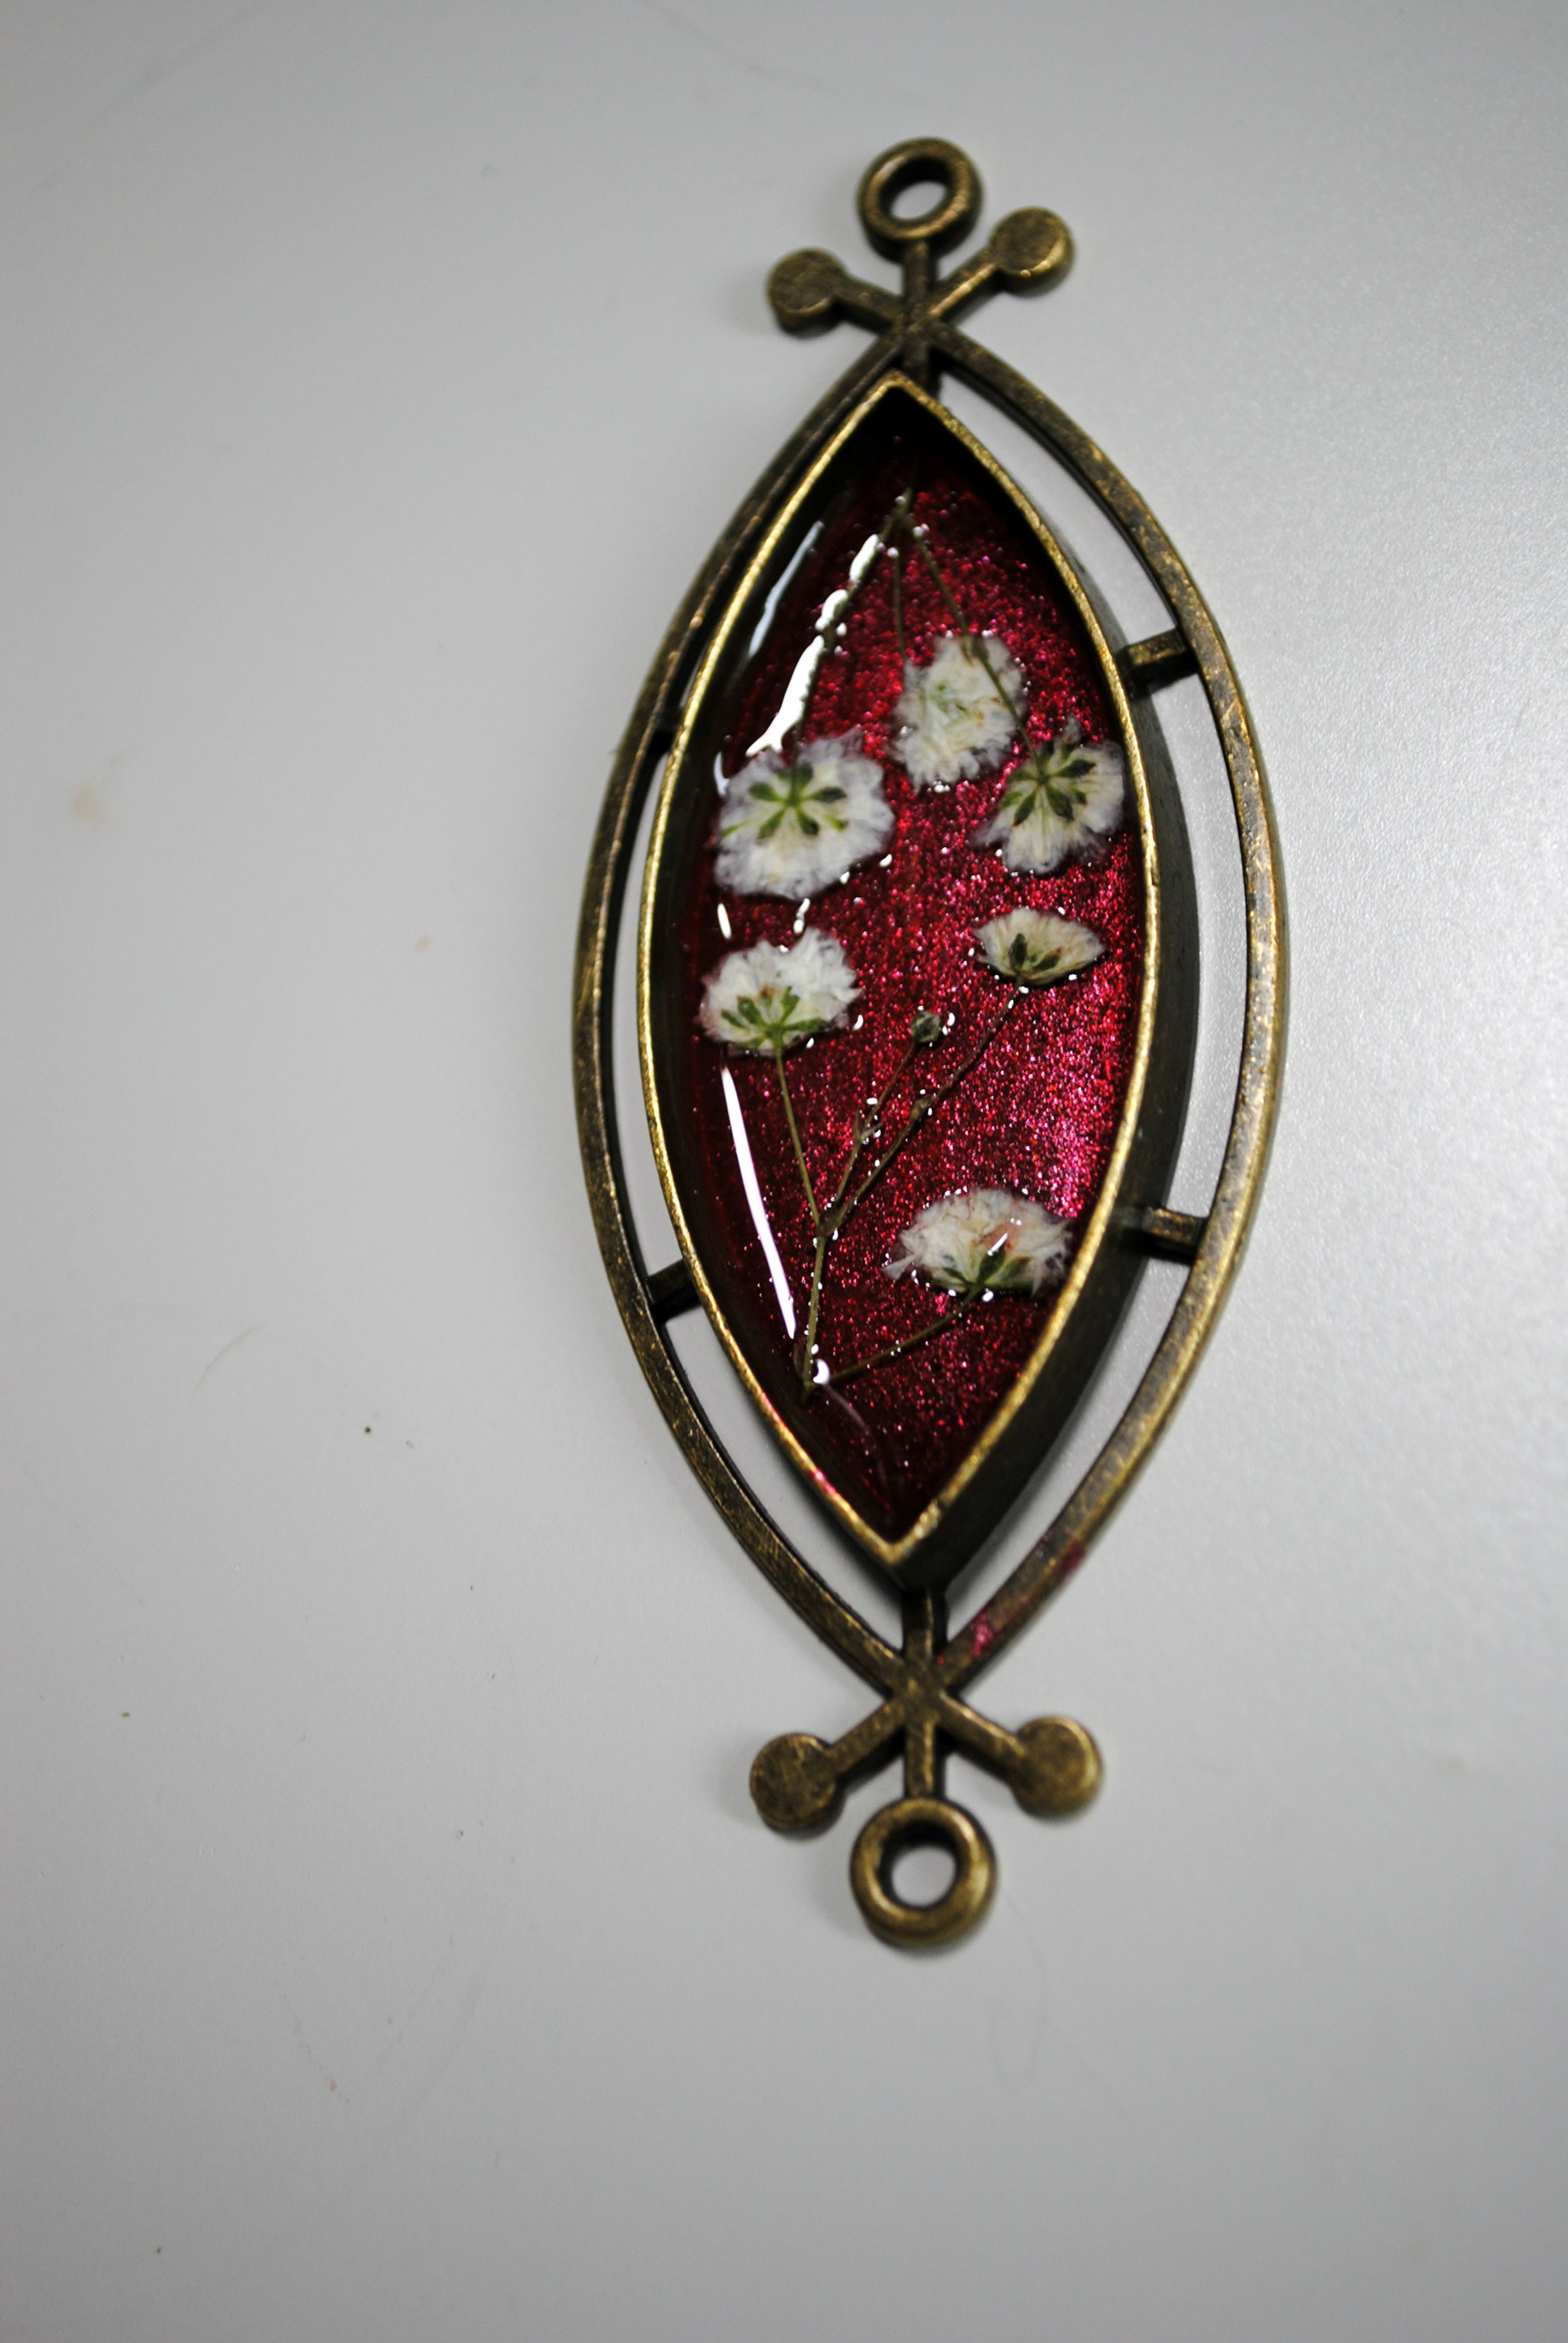 dried baby's breath flower in resin filled jewelry blank